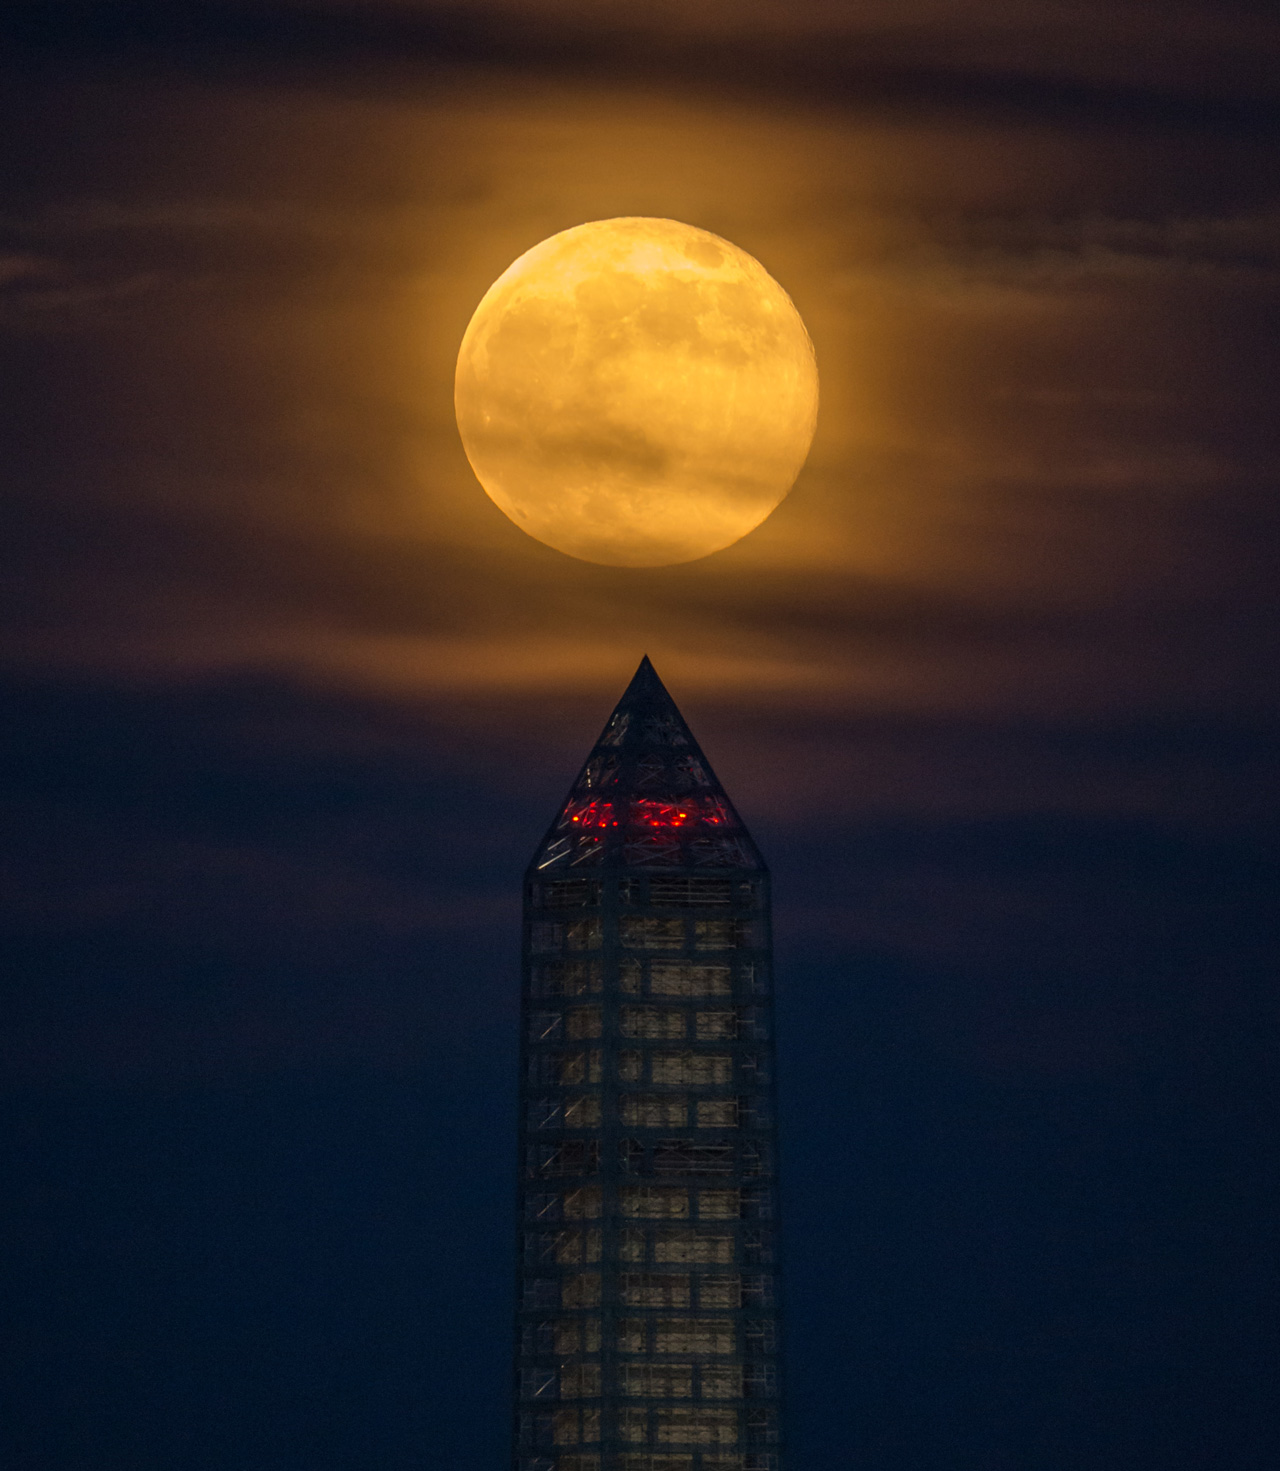 Moon rising behind Washington Monument obelisk.